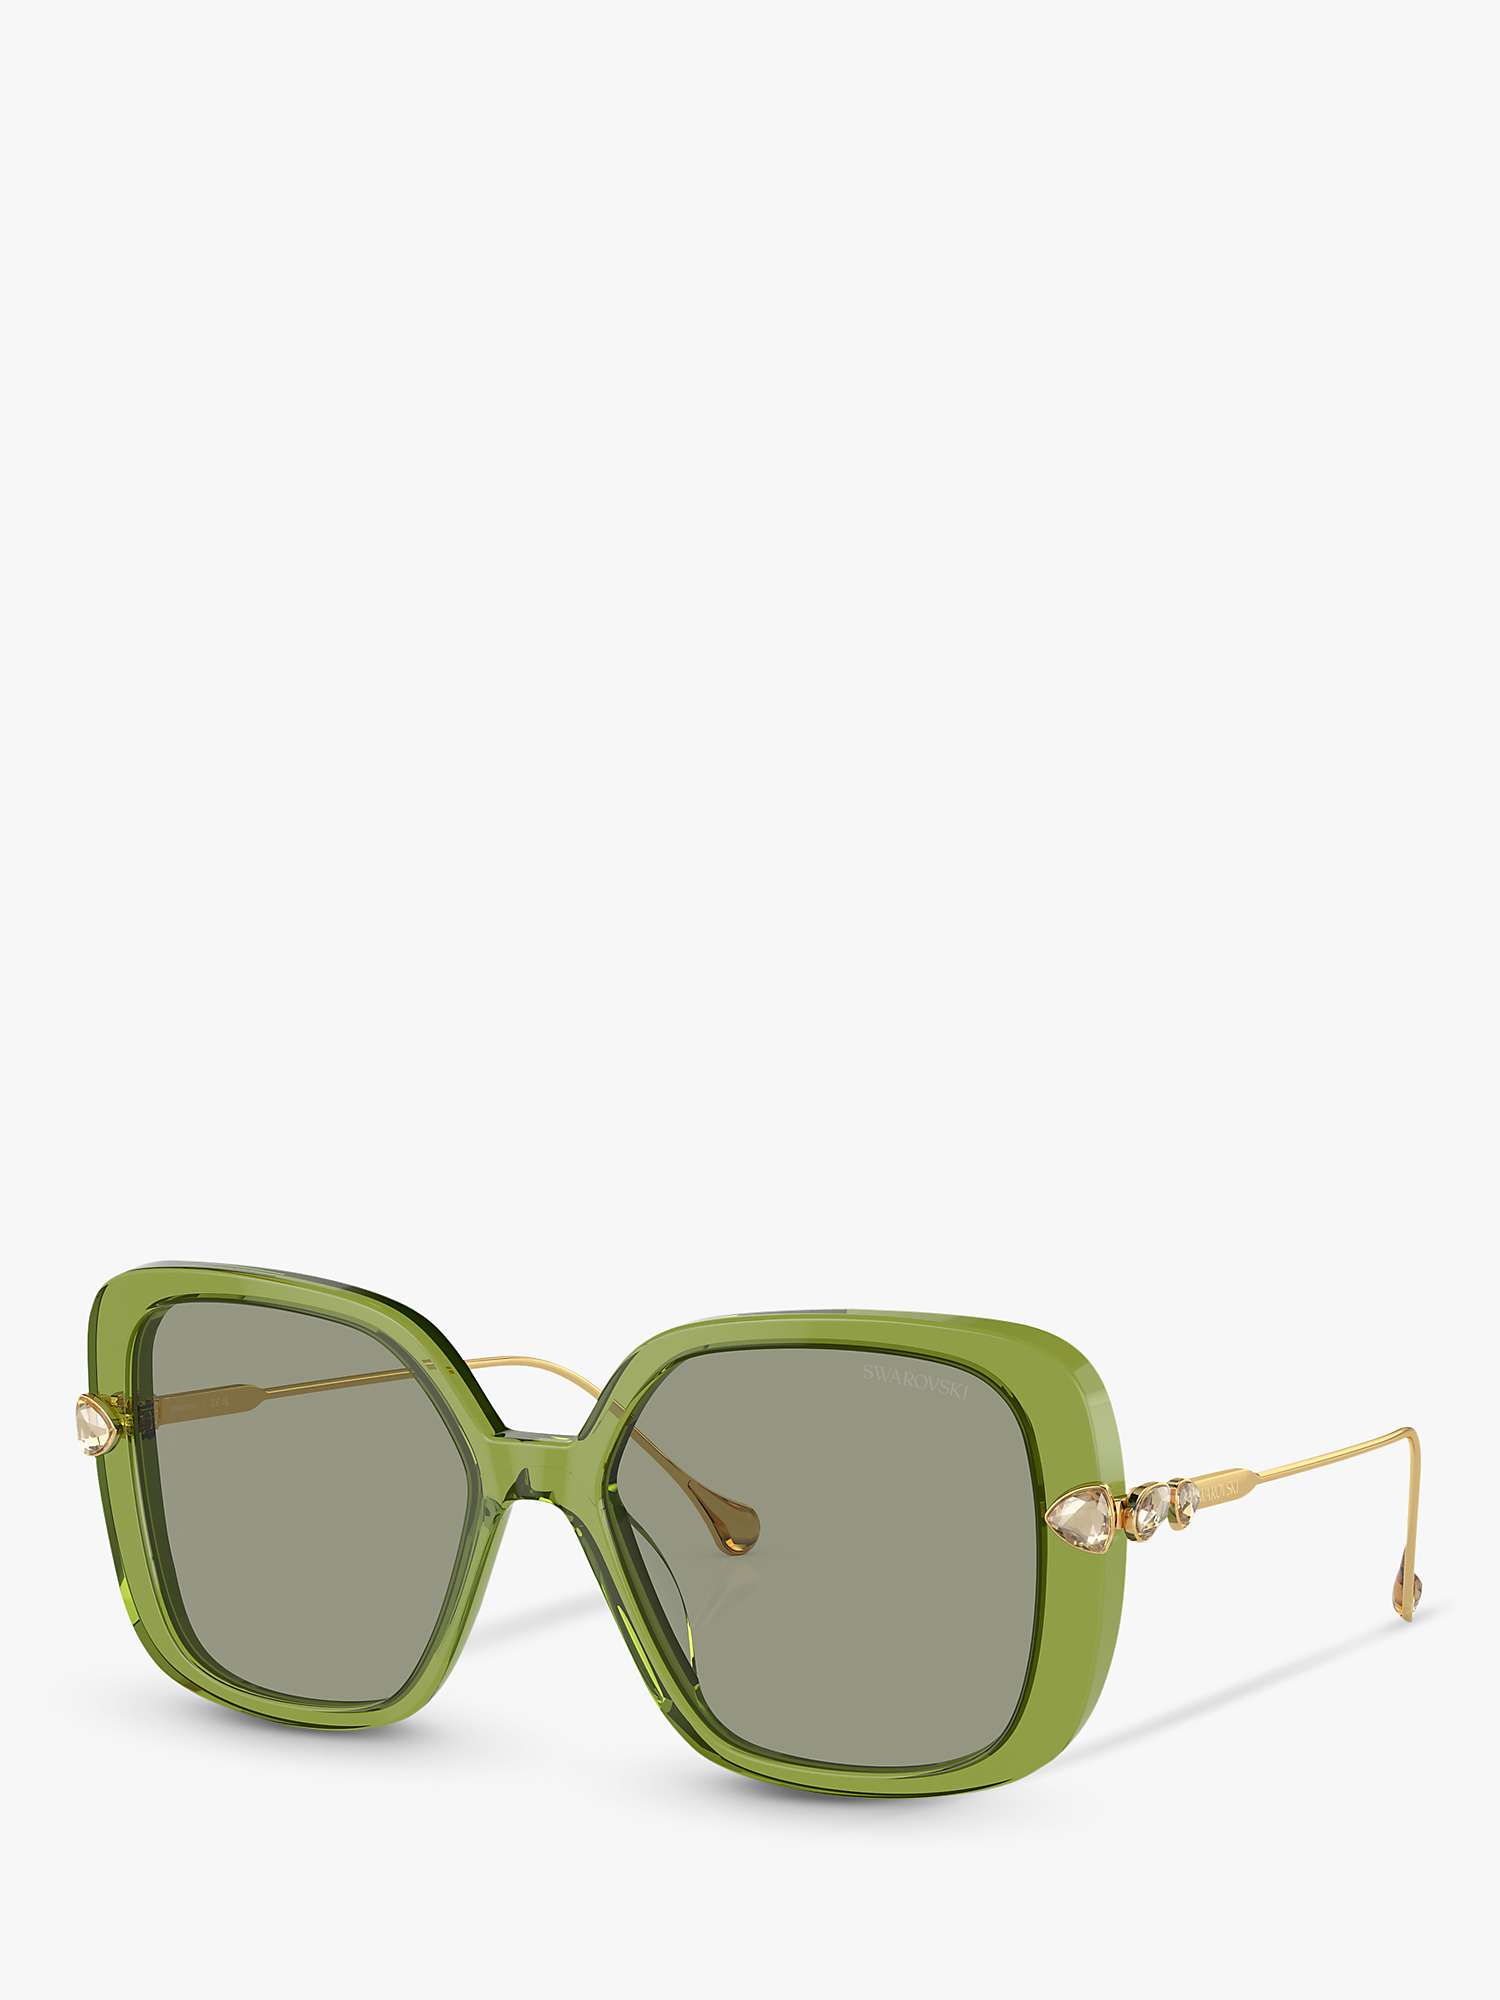 Buy Swarovski SK6011 Women's Square Sunglasses Online at johnlewis.com